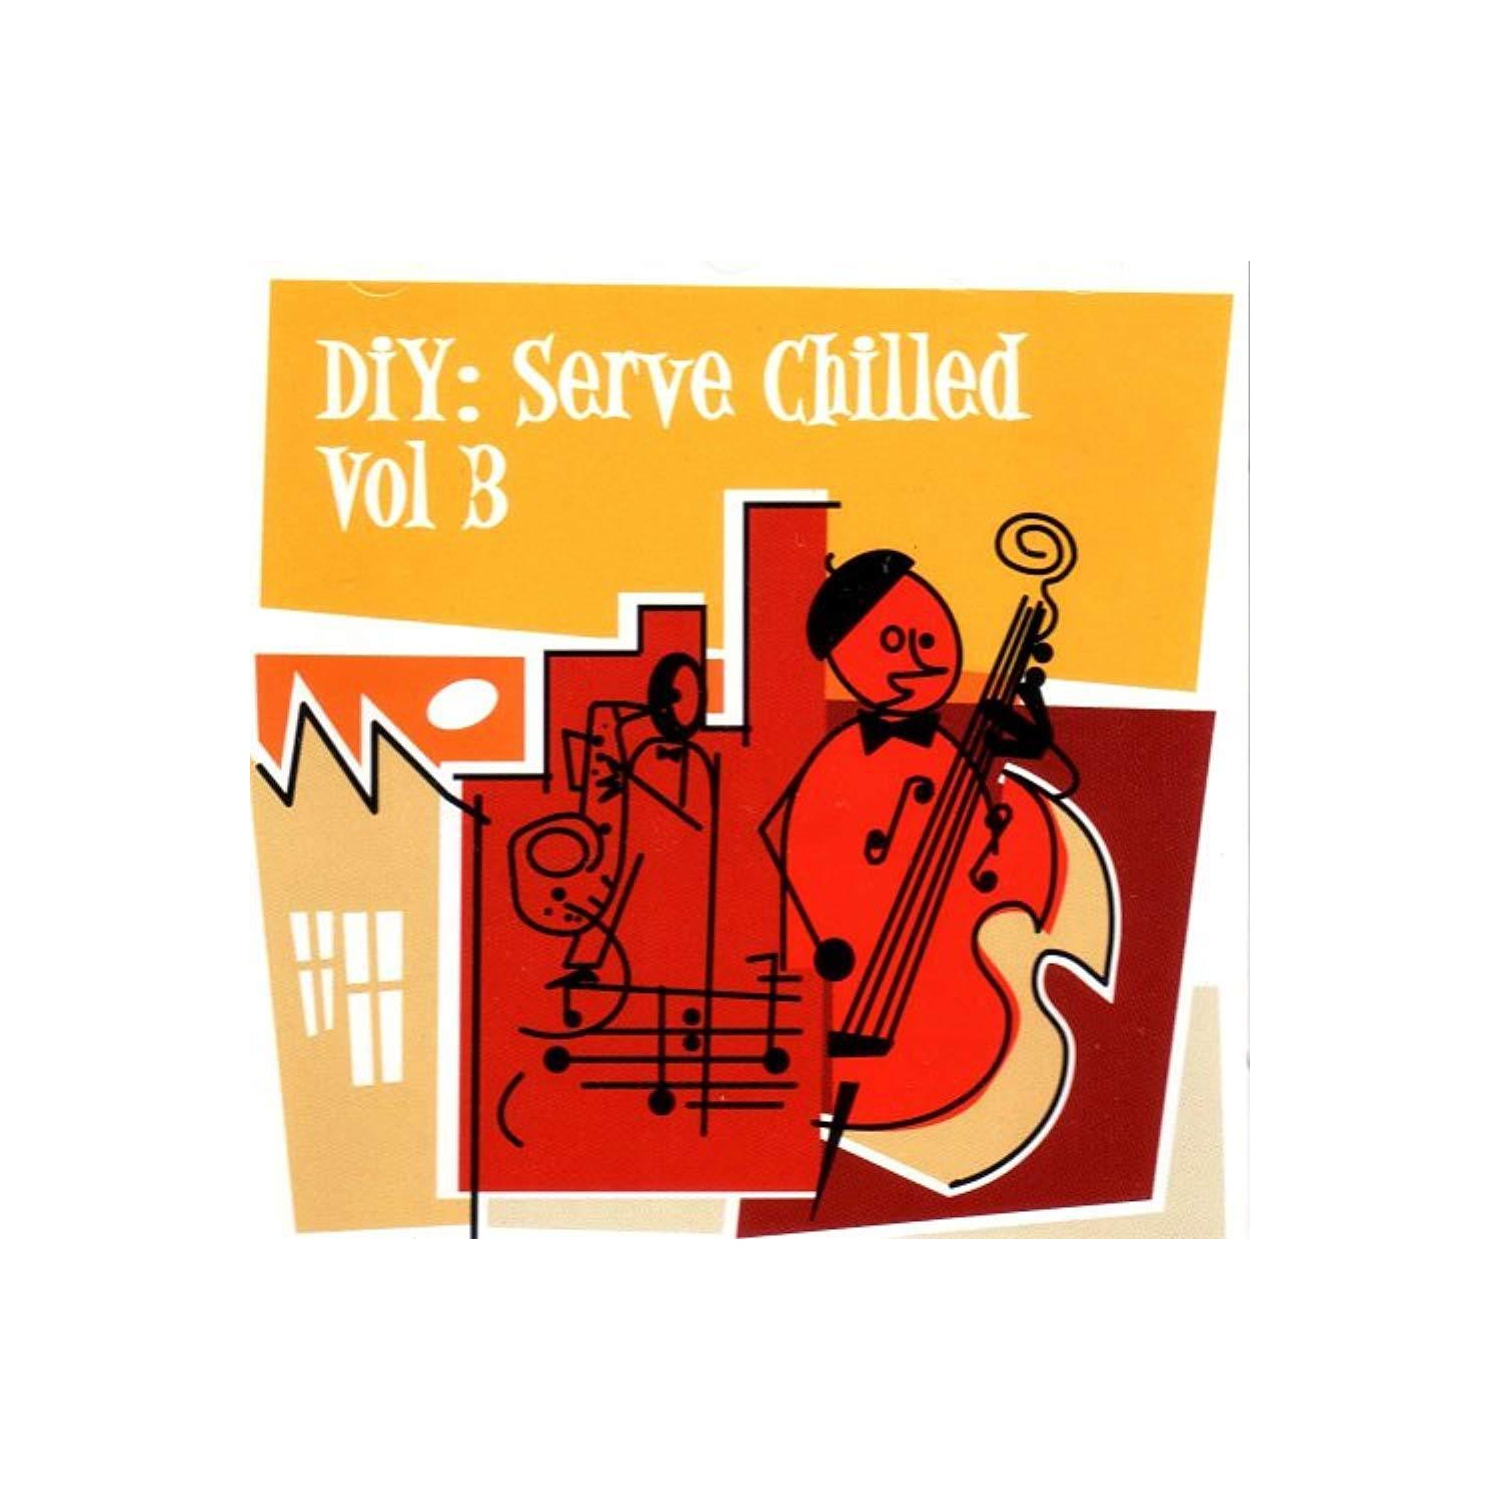 Diy: Serve Chilled Vol. 3 [Audio CD] Urb'n' Myth; Smokers Blend 3000; Schmoov; Yoshi; Transformer; Caia; Digs